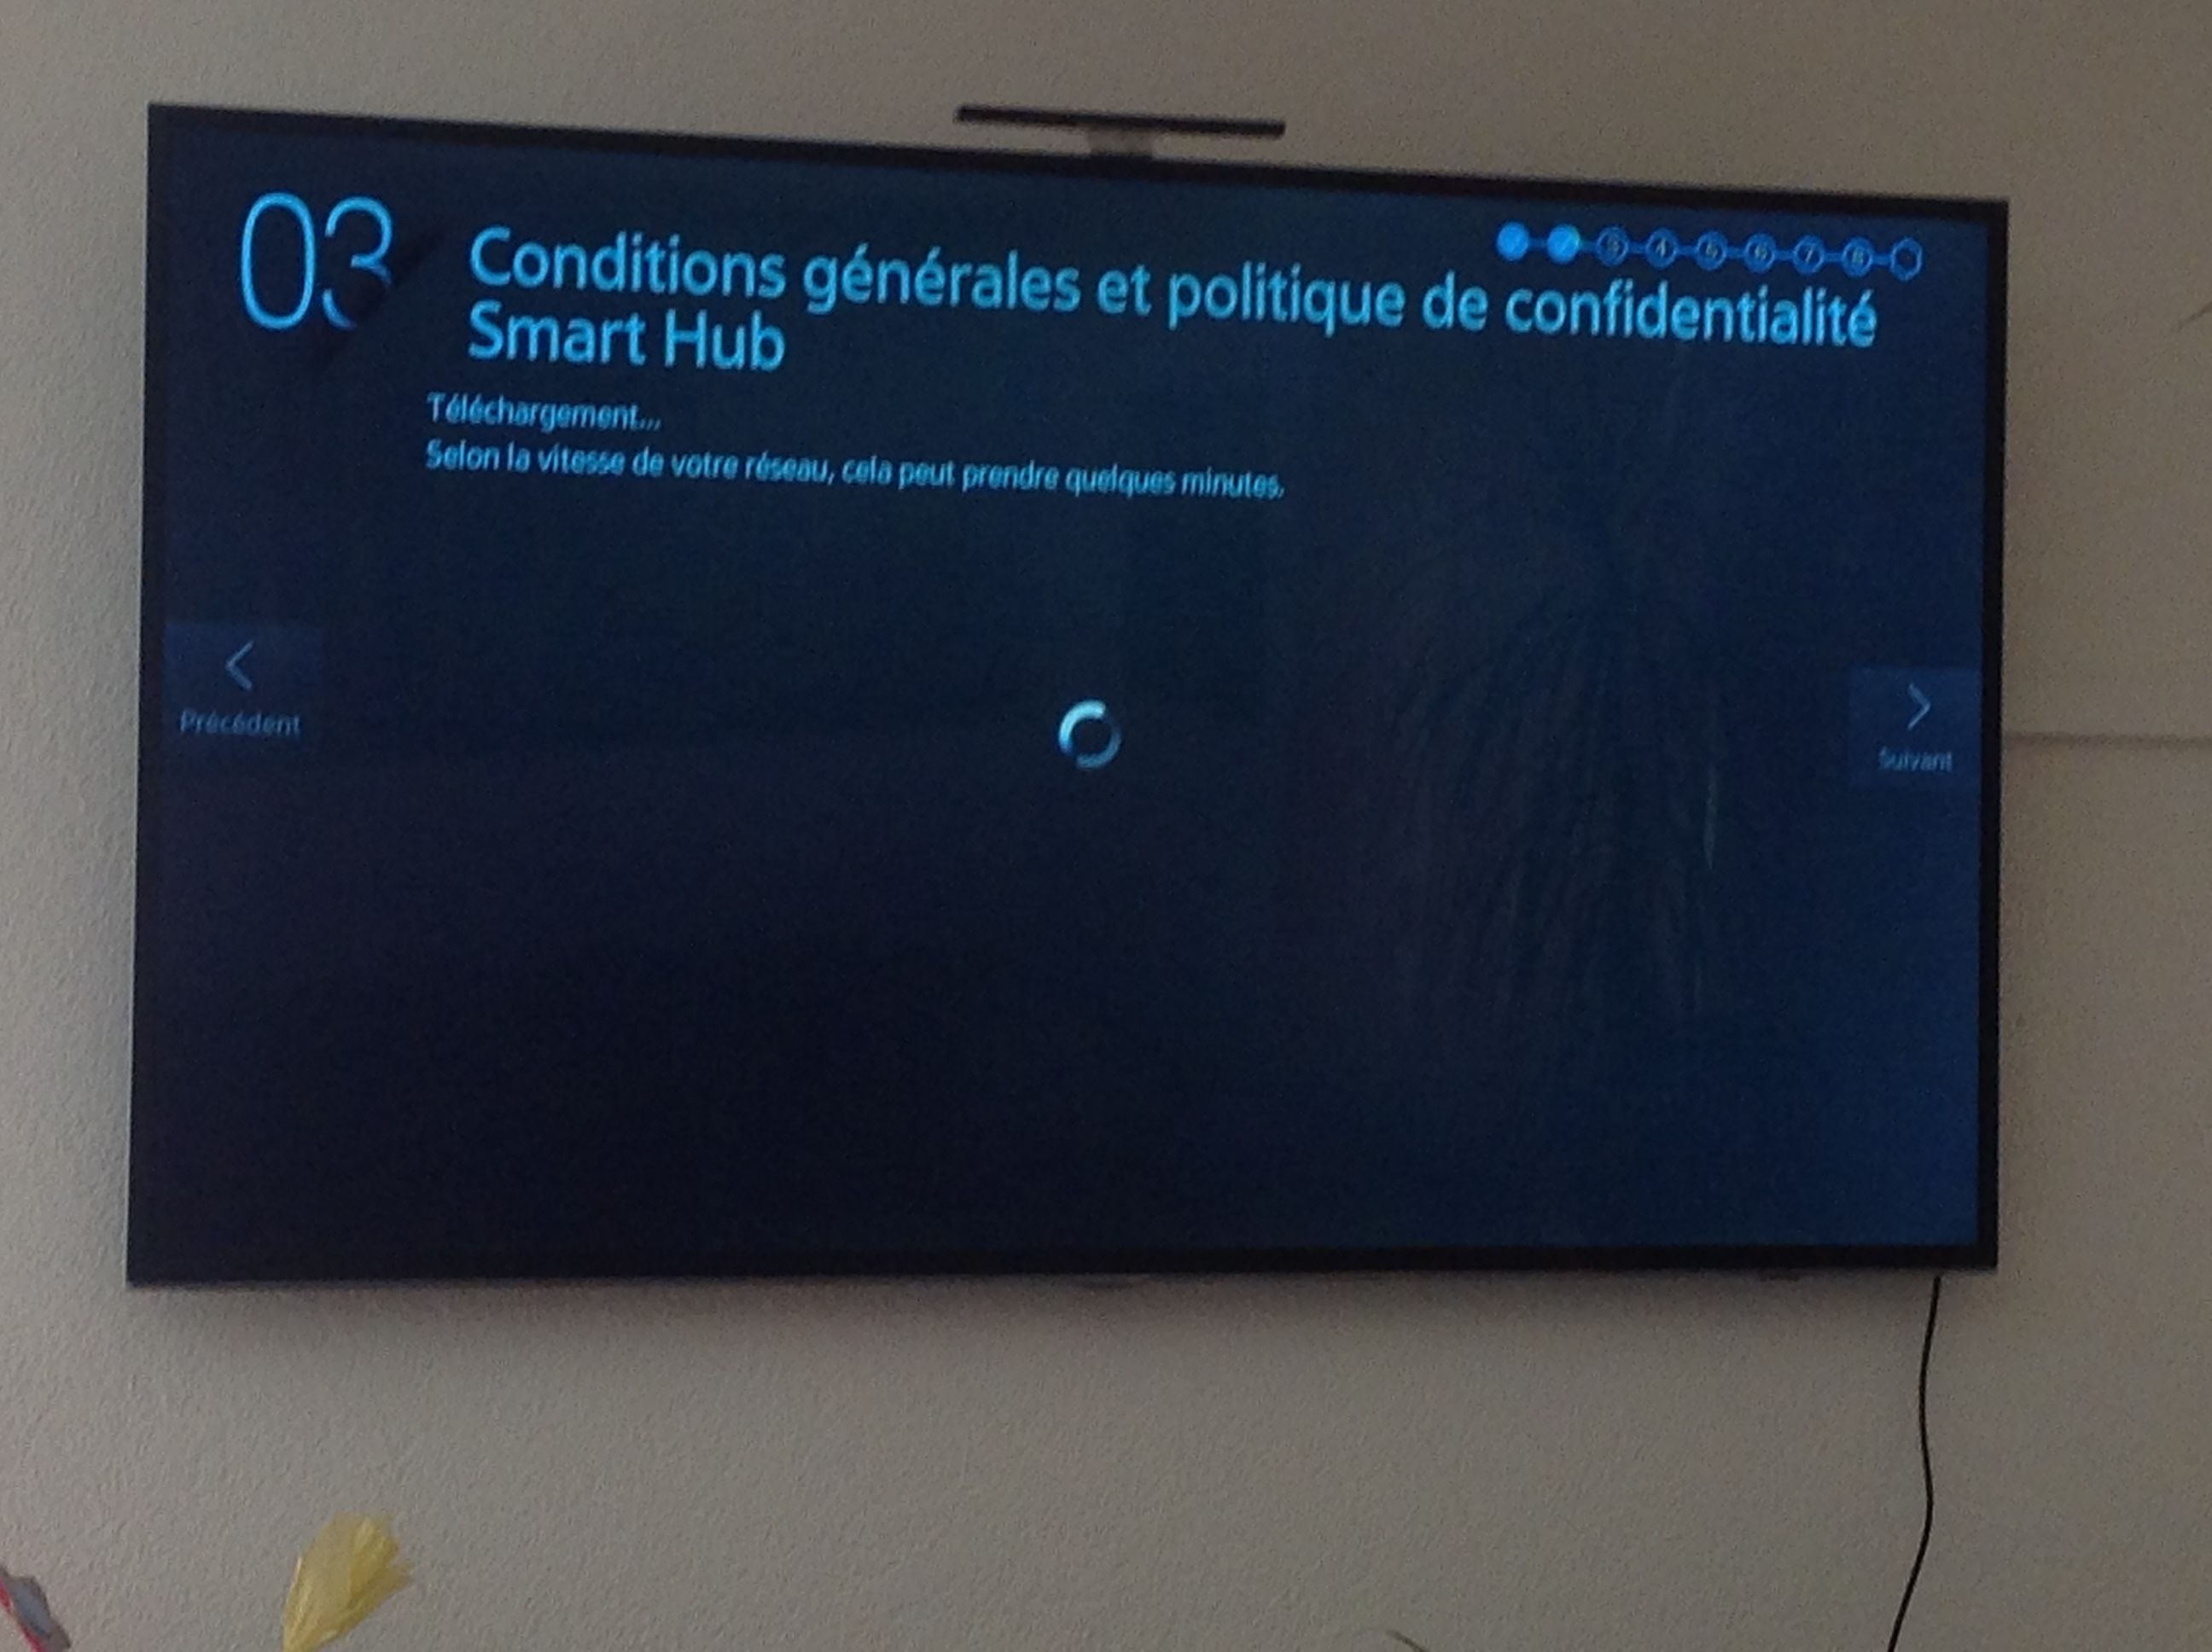 TV qui bloque sur smart hub Puis redémarre - Samsung Community